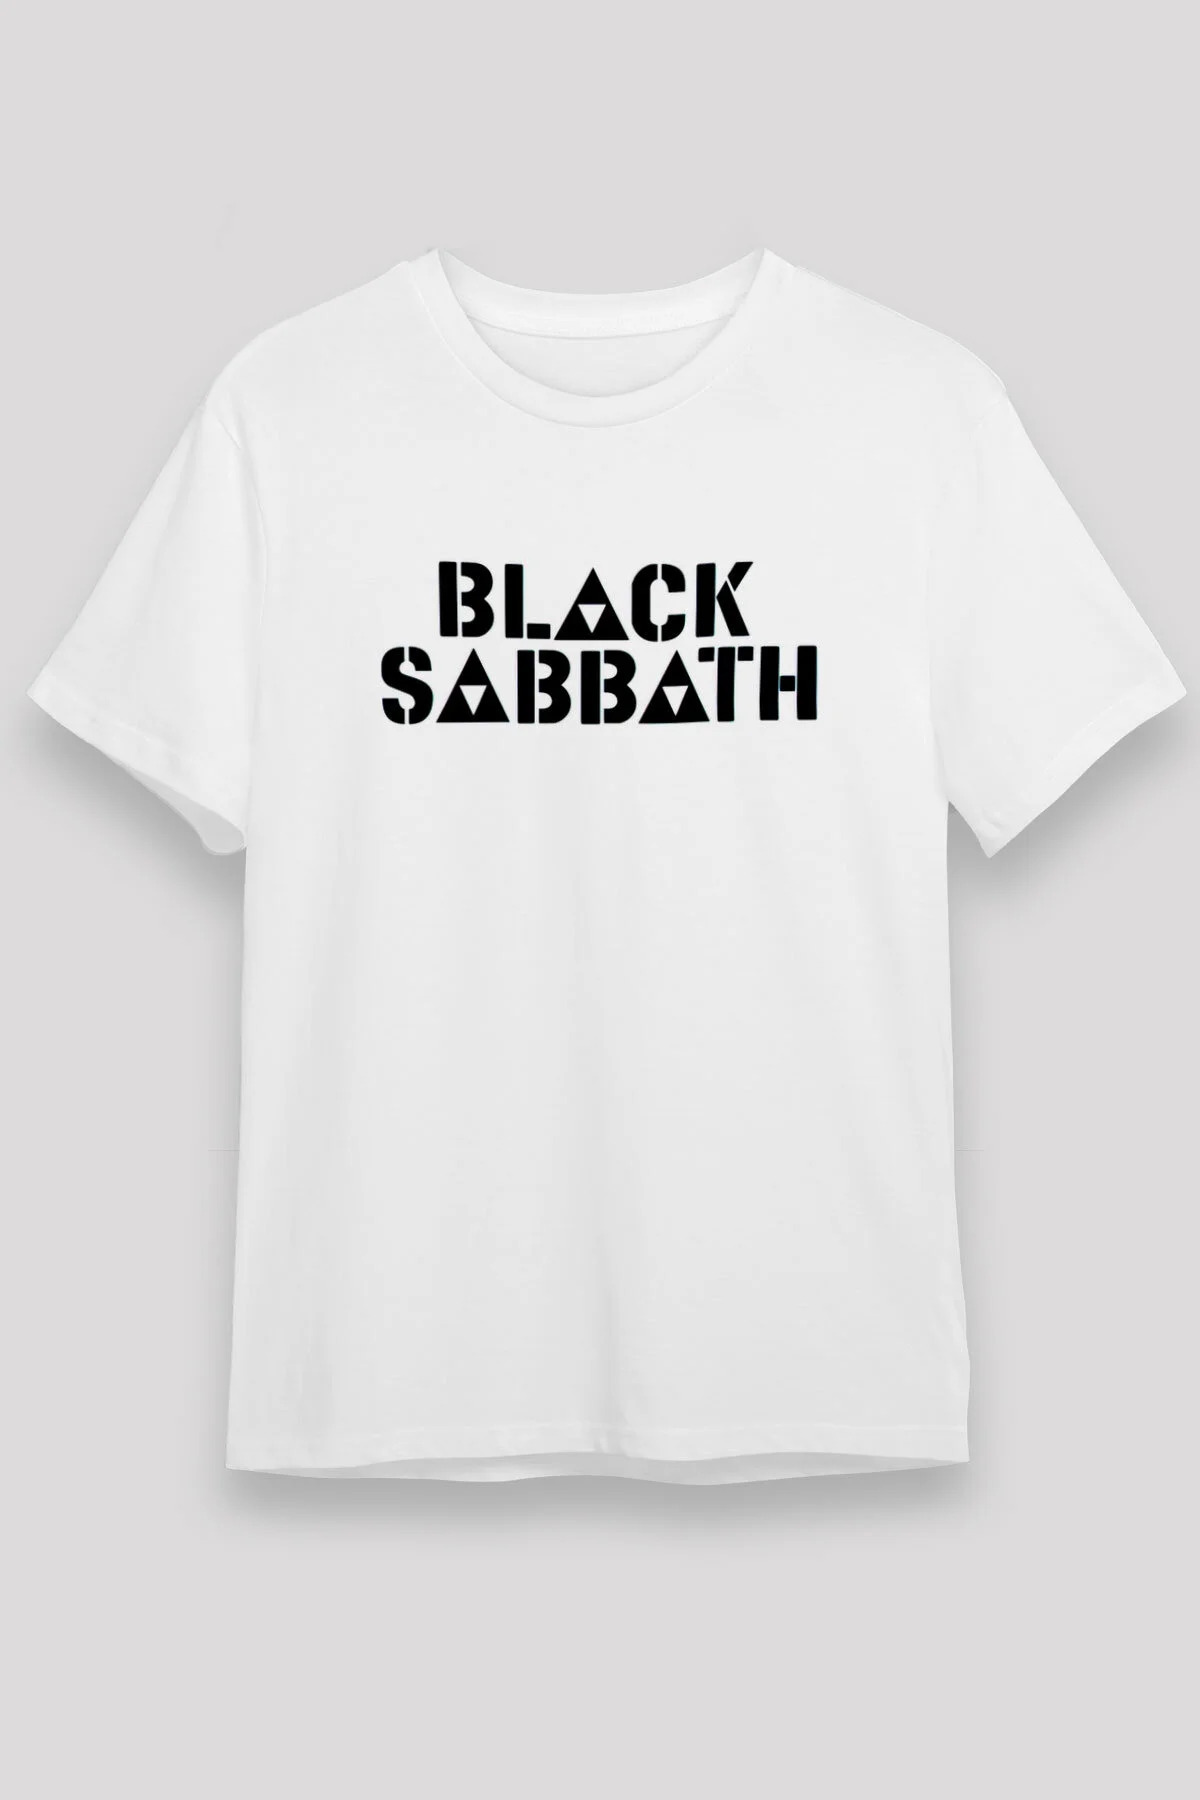 Black Sabbath ,Rock Music Band ,Unisex Tshirt 47